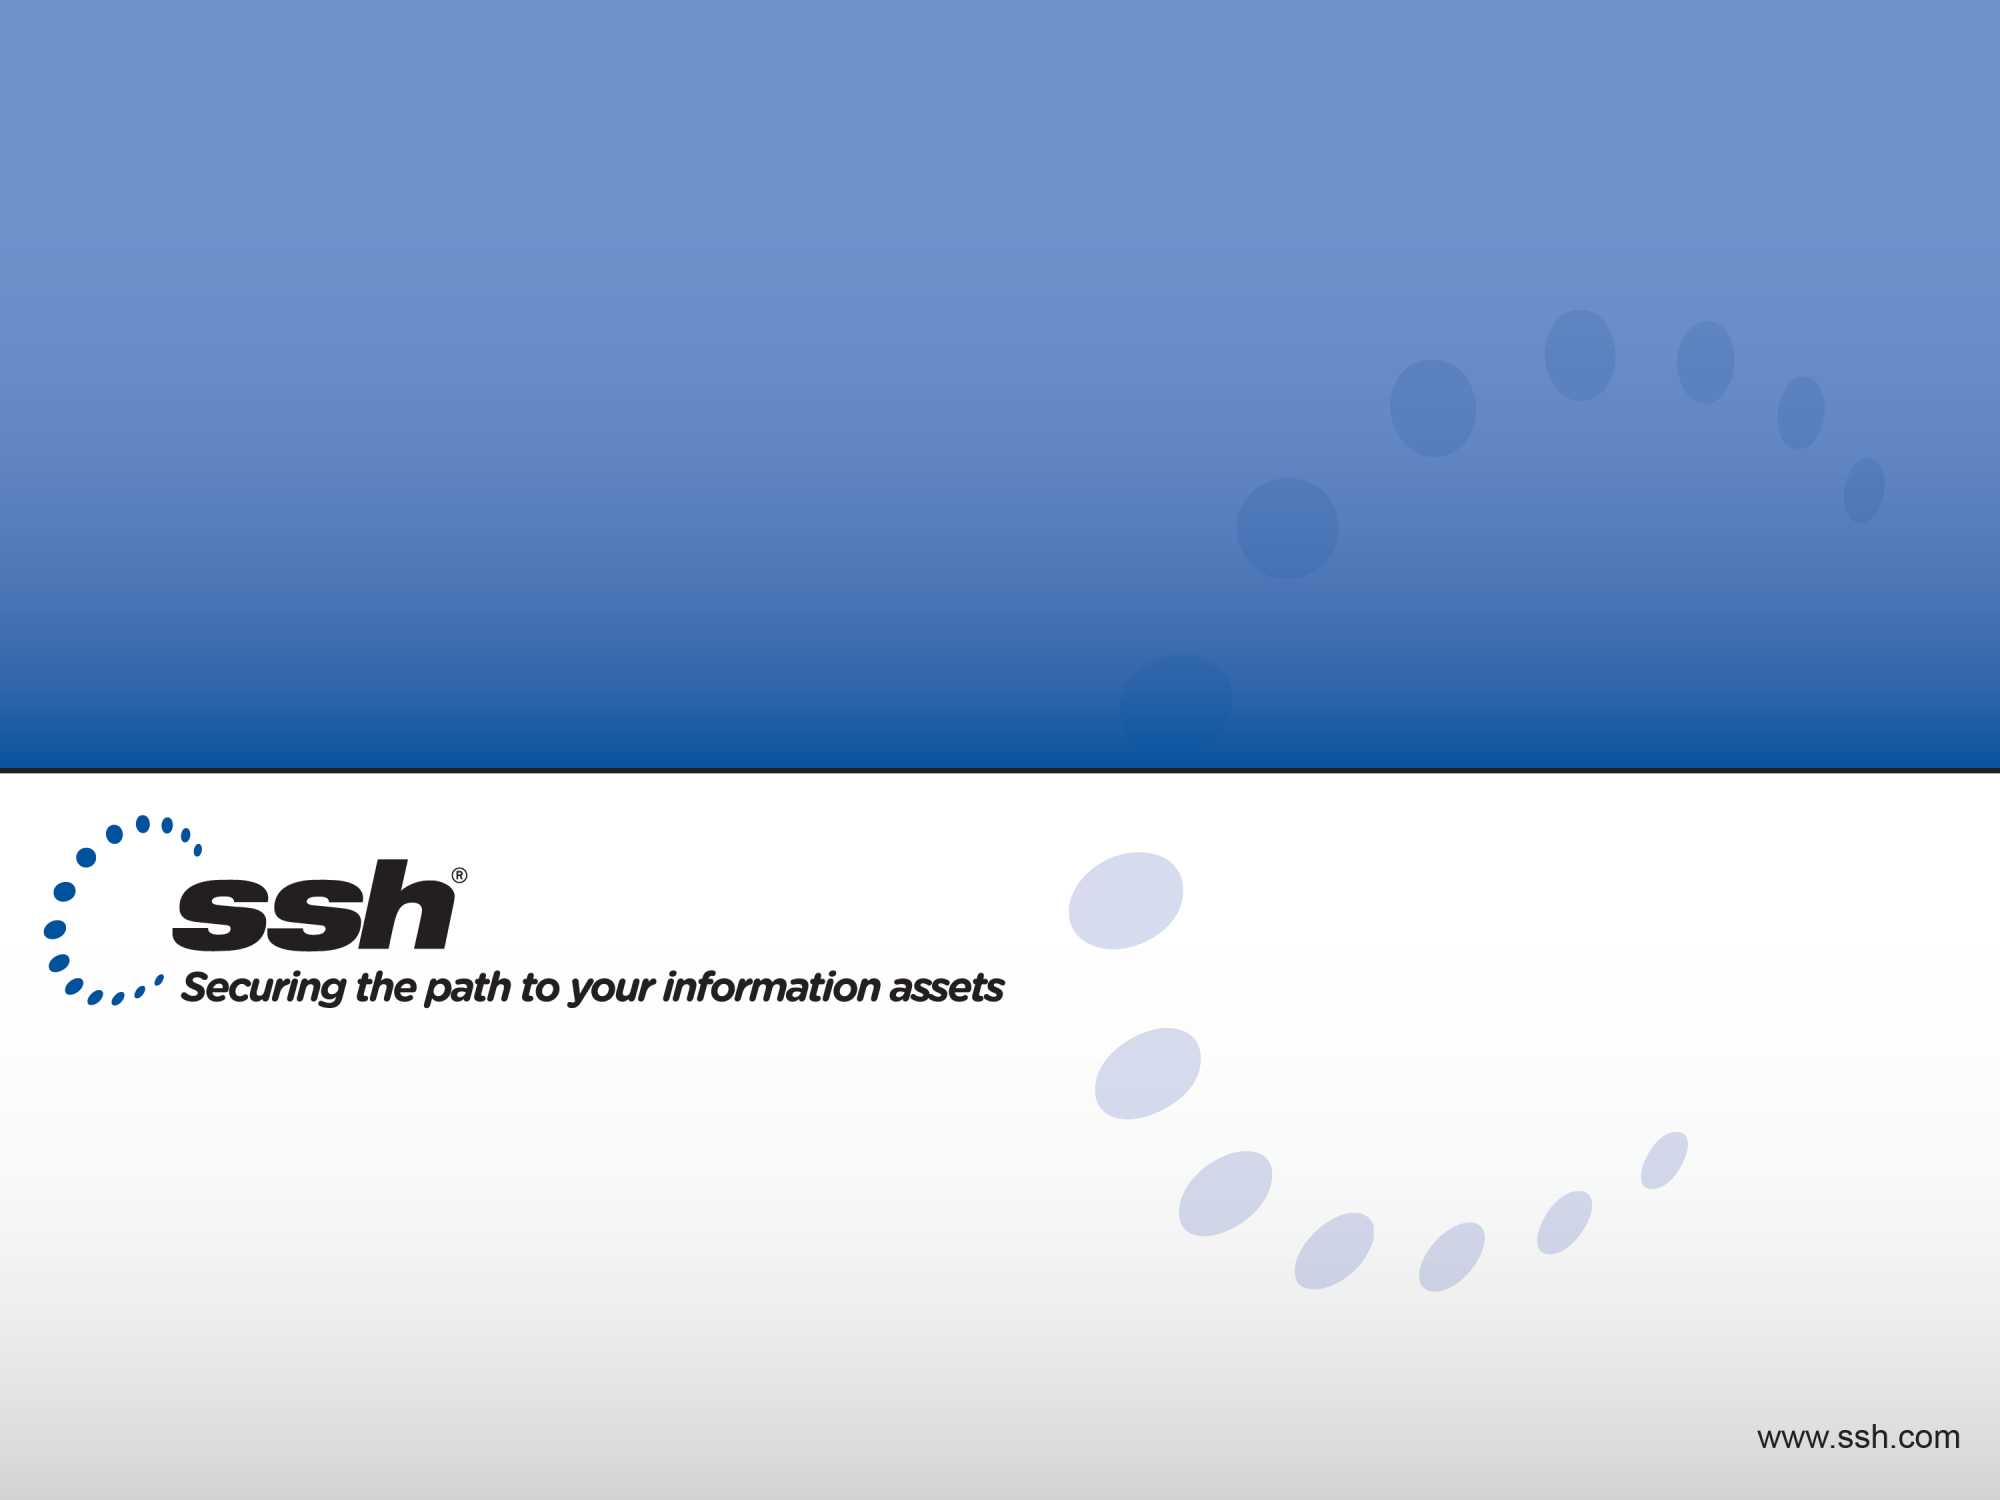 SSH Communications Security Pörssi-ilta 2.9.